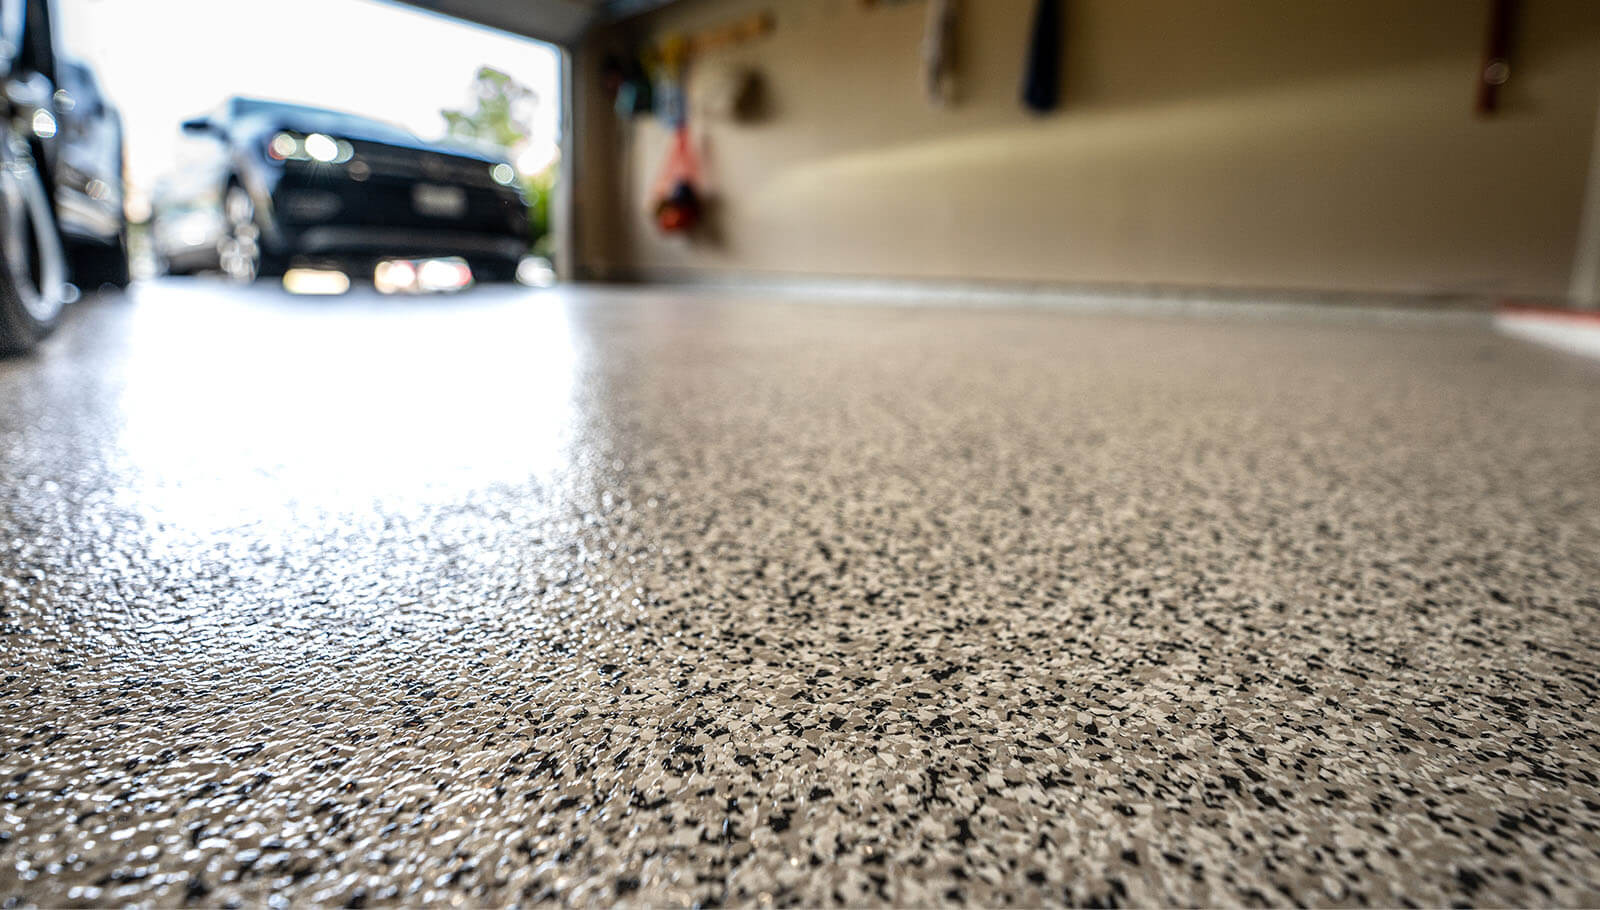 Repaired garage floor with epoxy coating